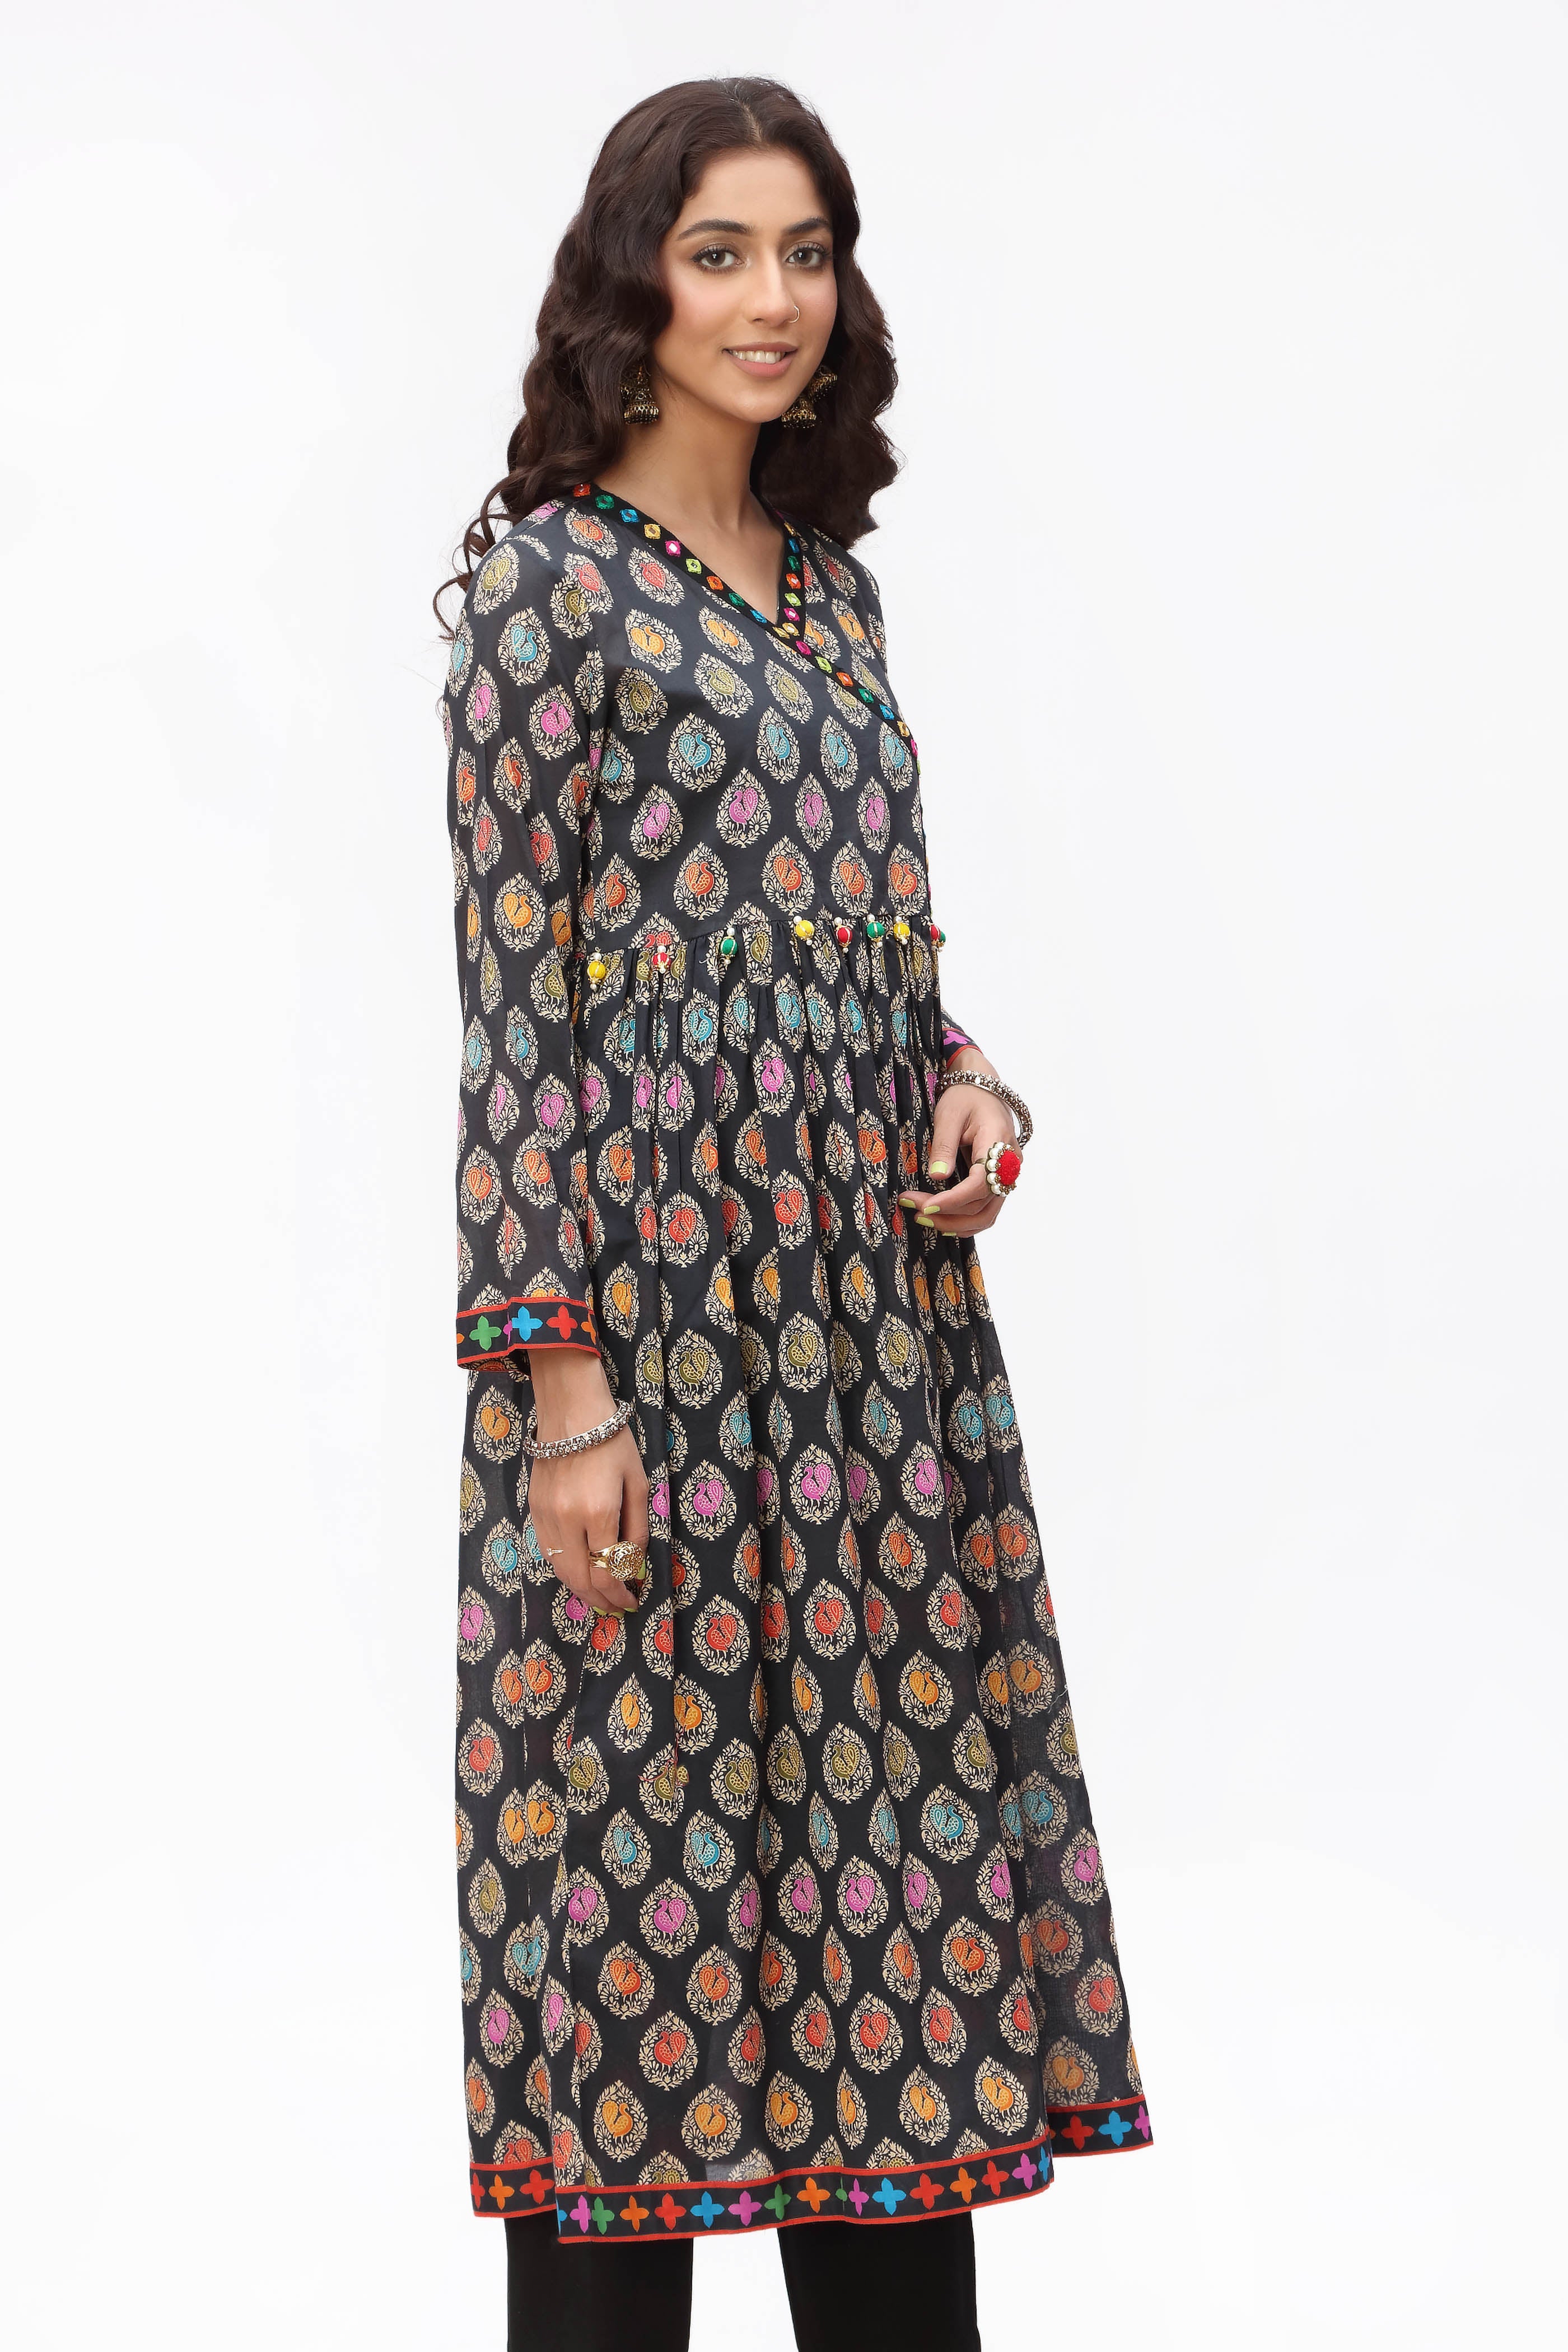 Morr Kahani in Multi coloured Printed Lawn fabric 2